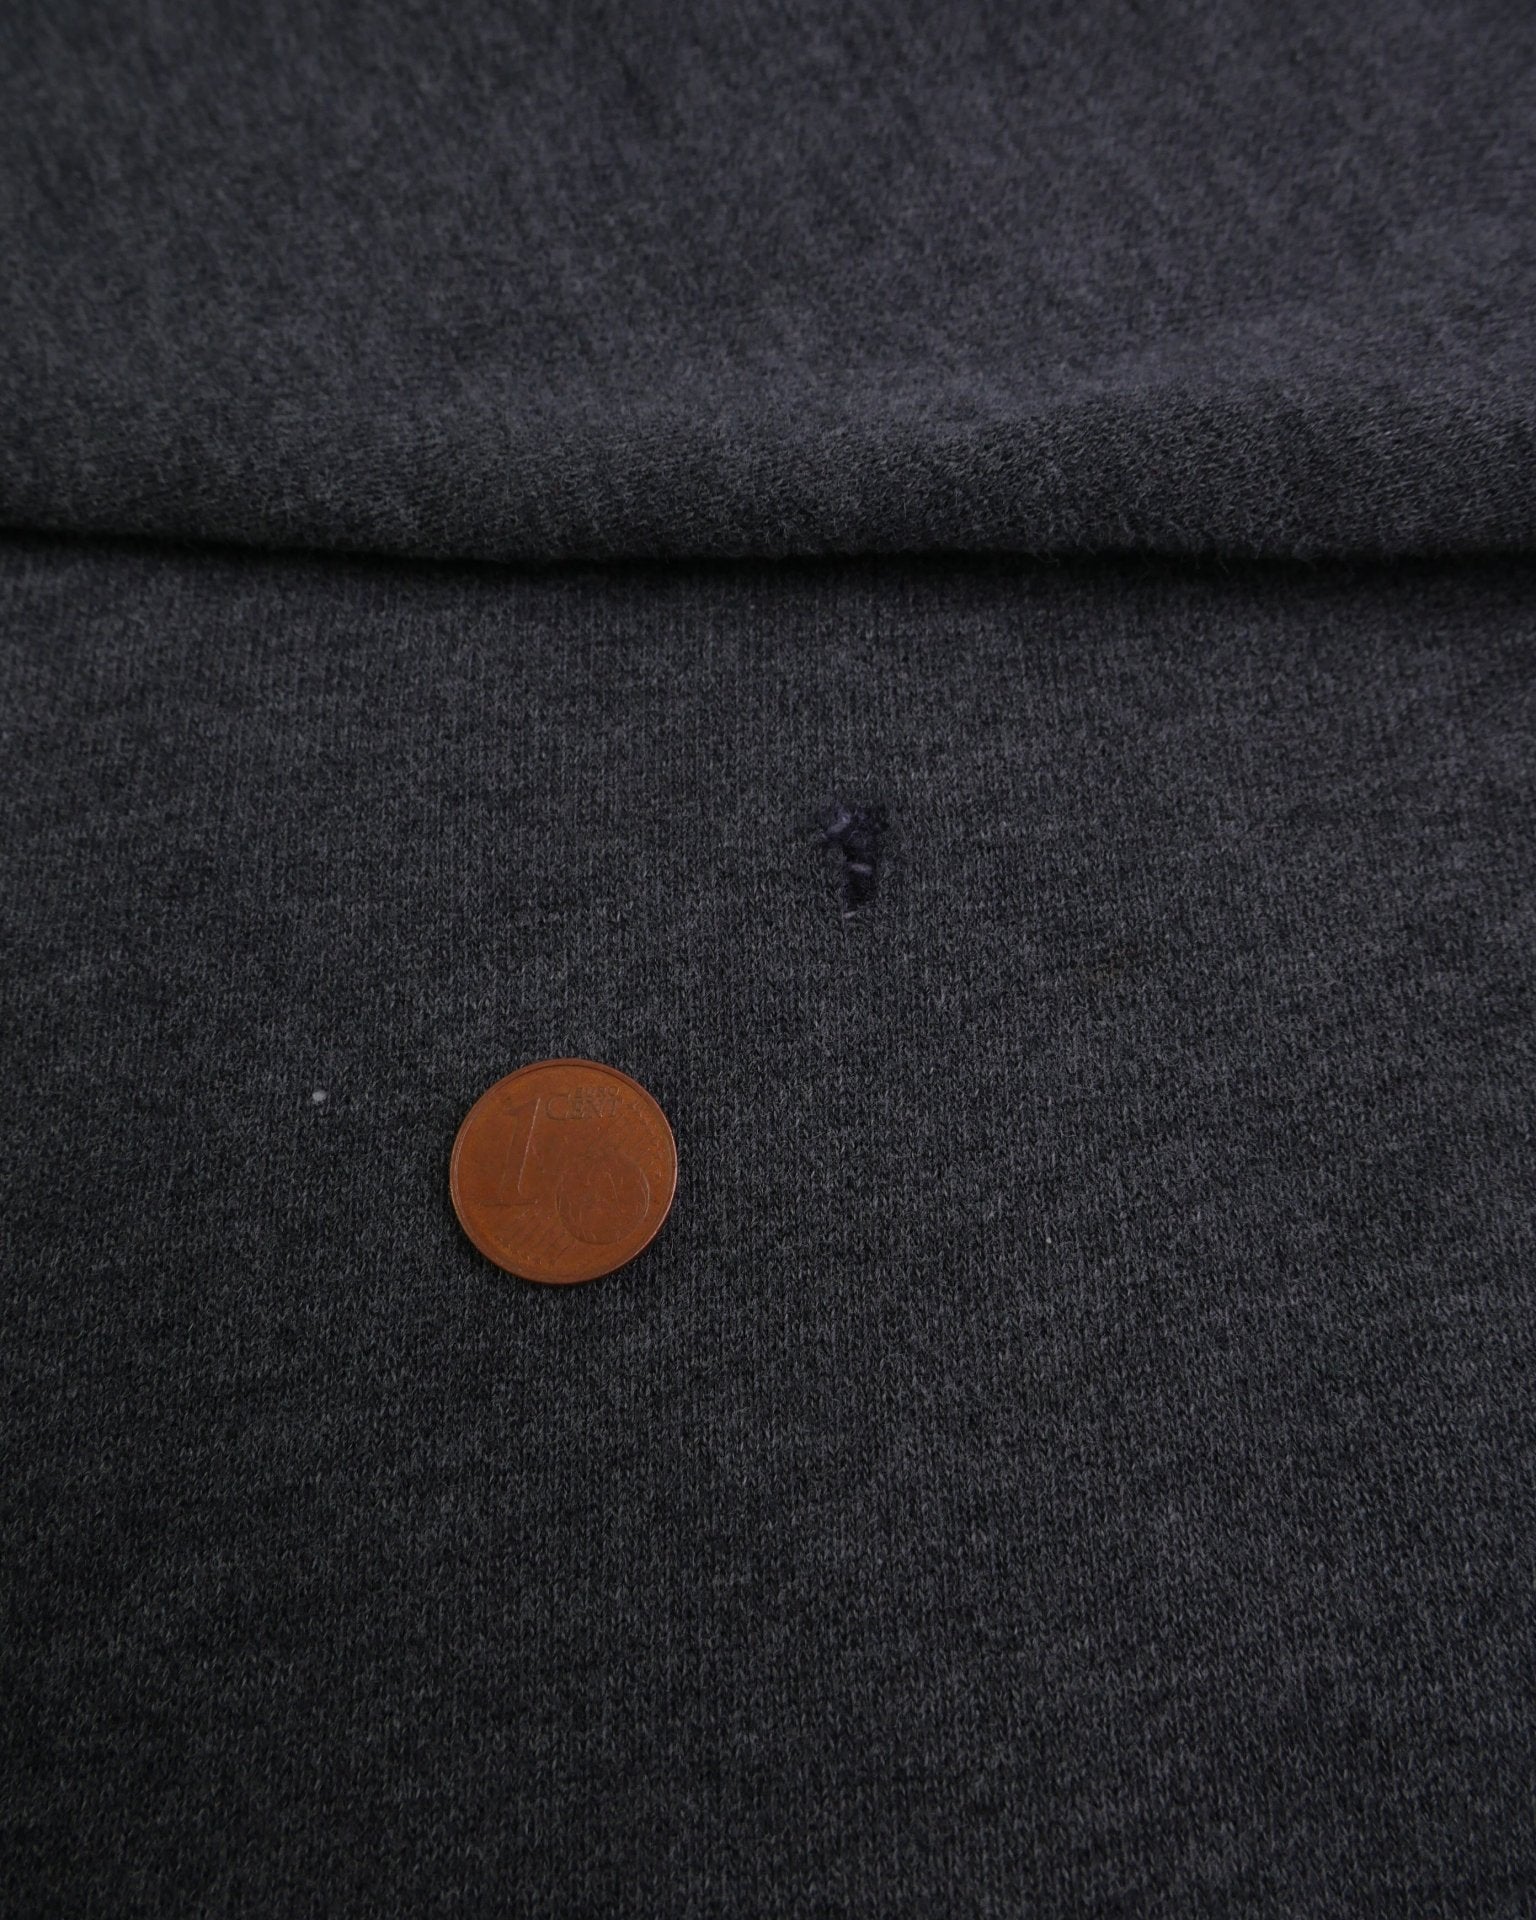 Fila embroidered Logo basic Vintage Sweater - Peeces